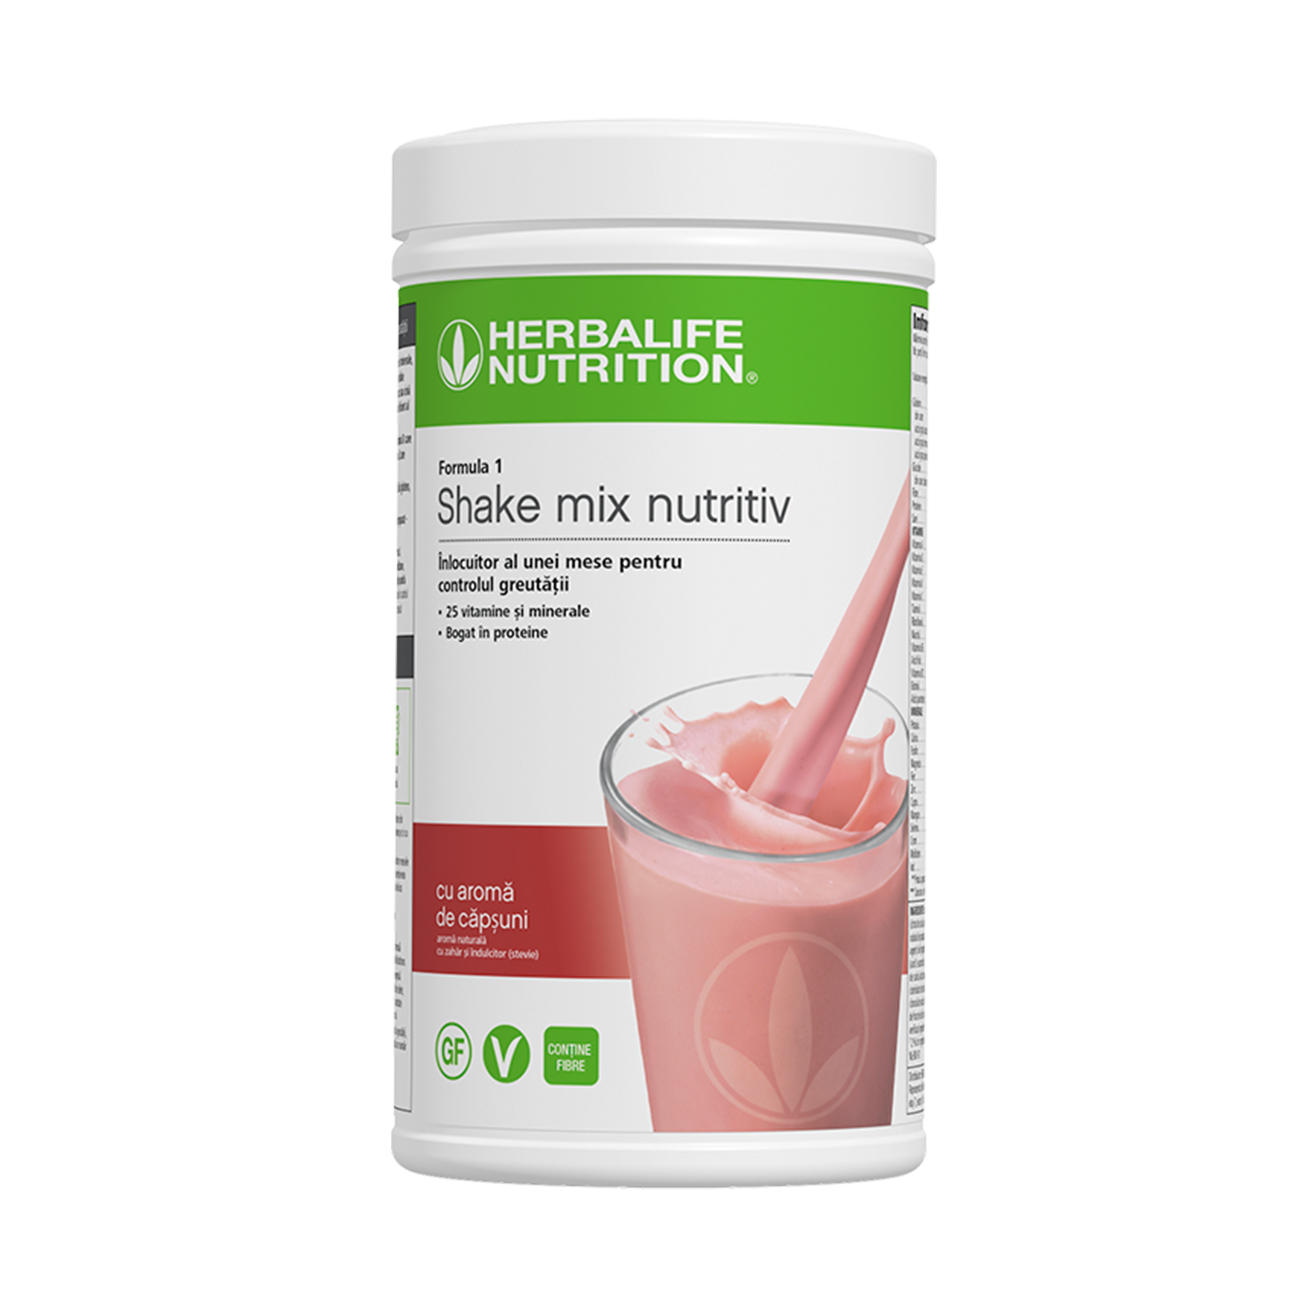 Formula 1 Shake mix nutritiv Căpșune product shot